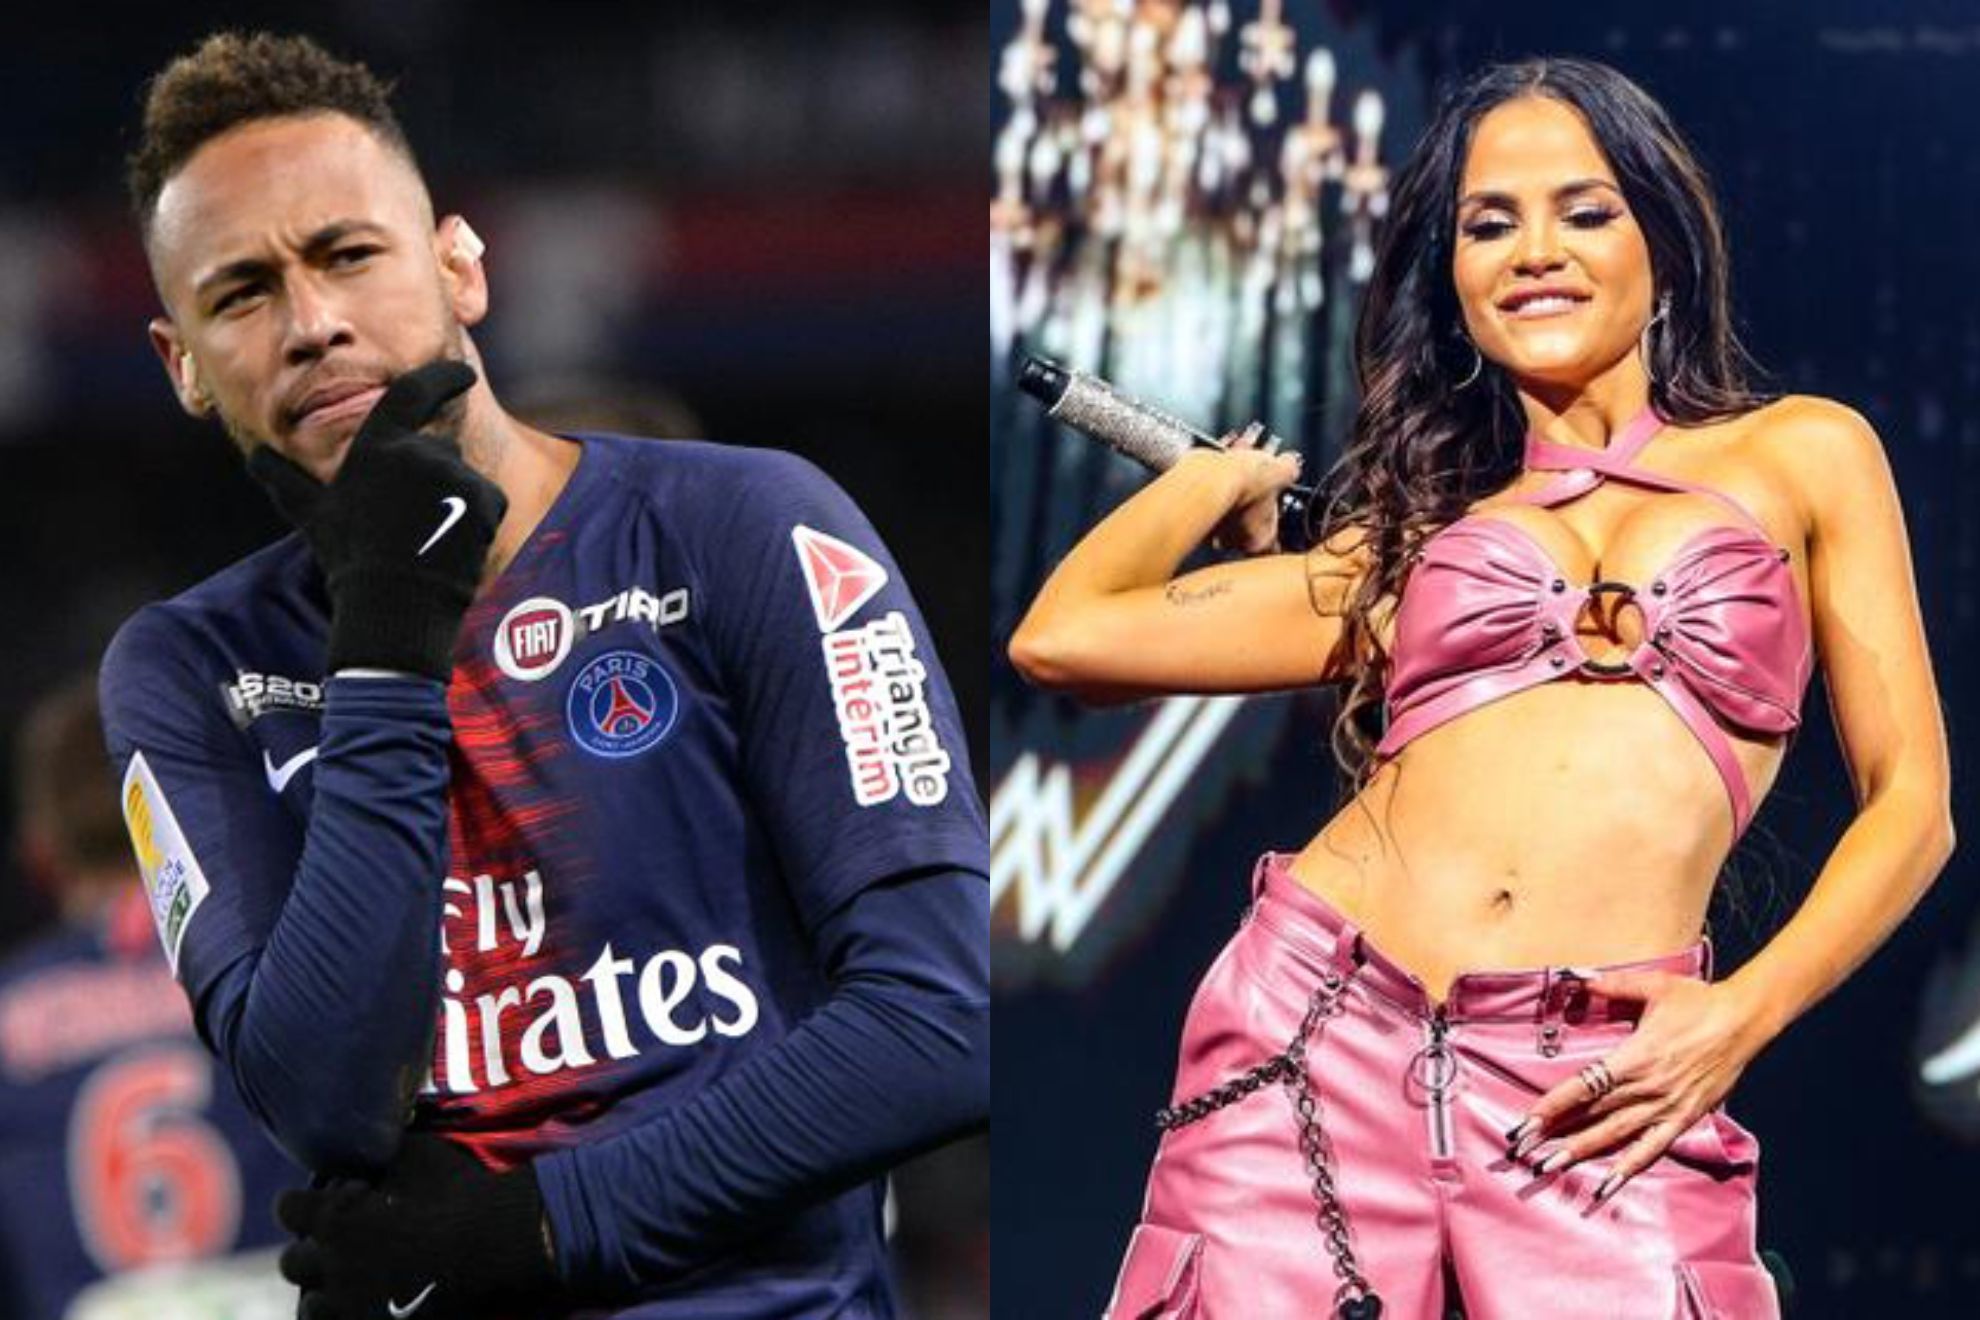 New rumors hint at possible relationship between Neymar and Natti Natasha